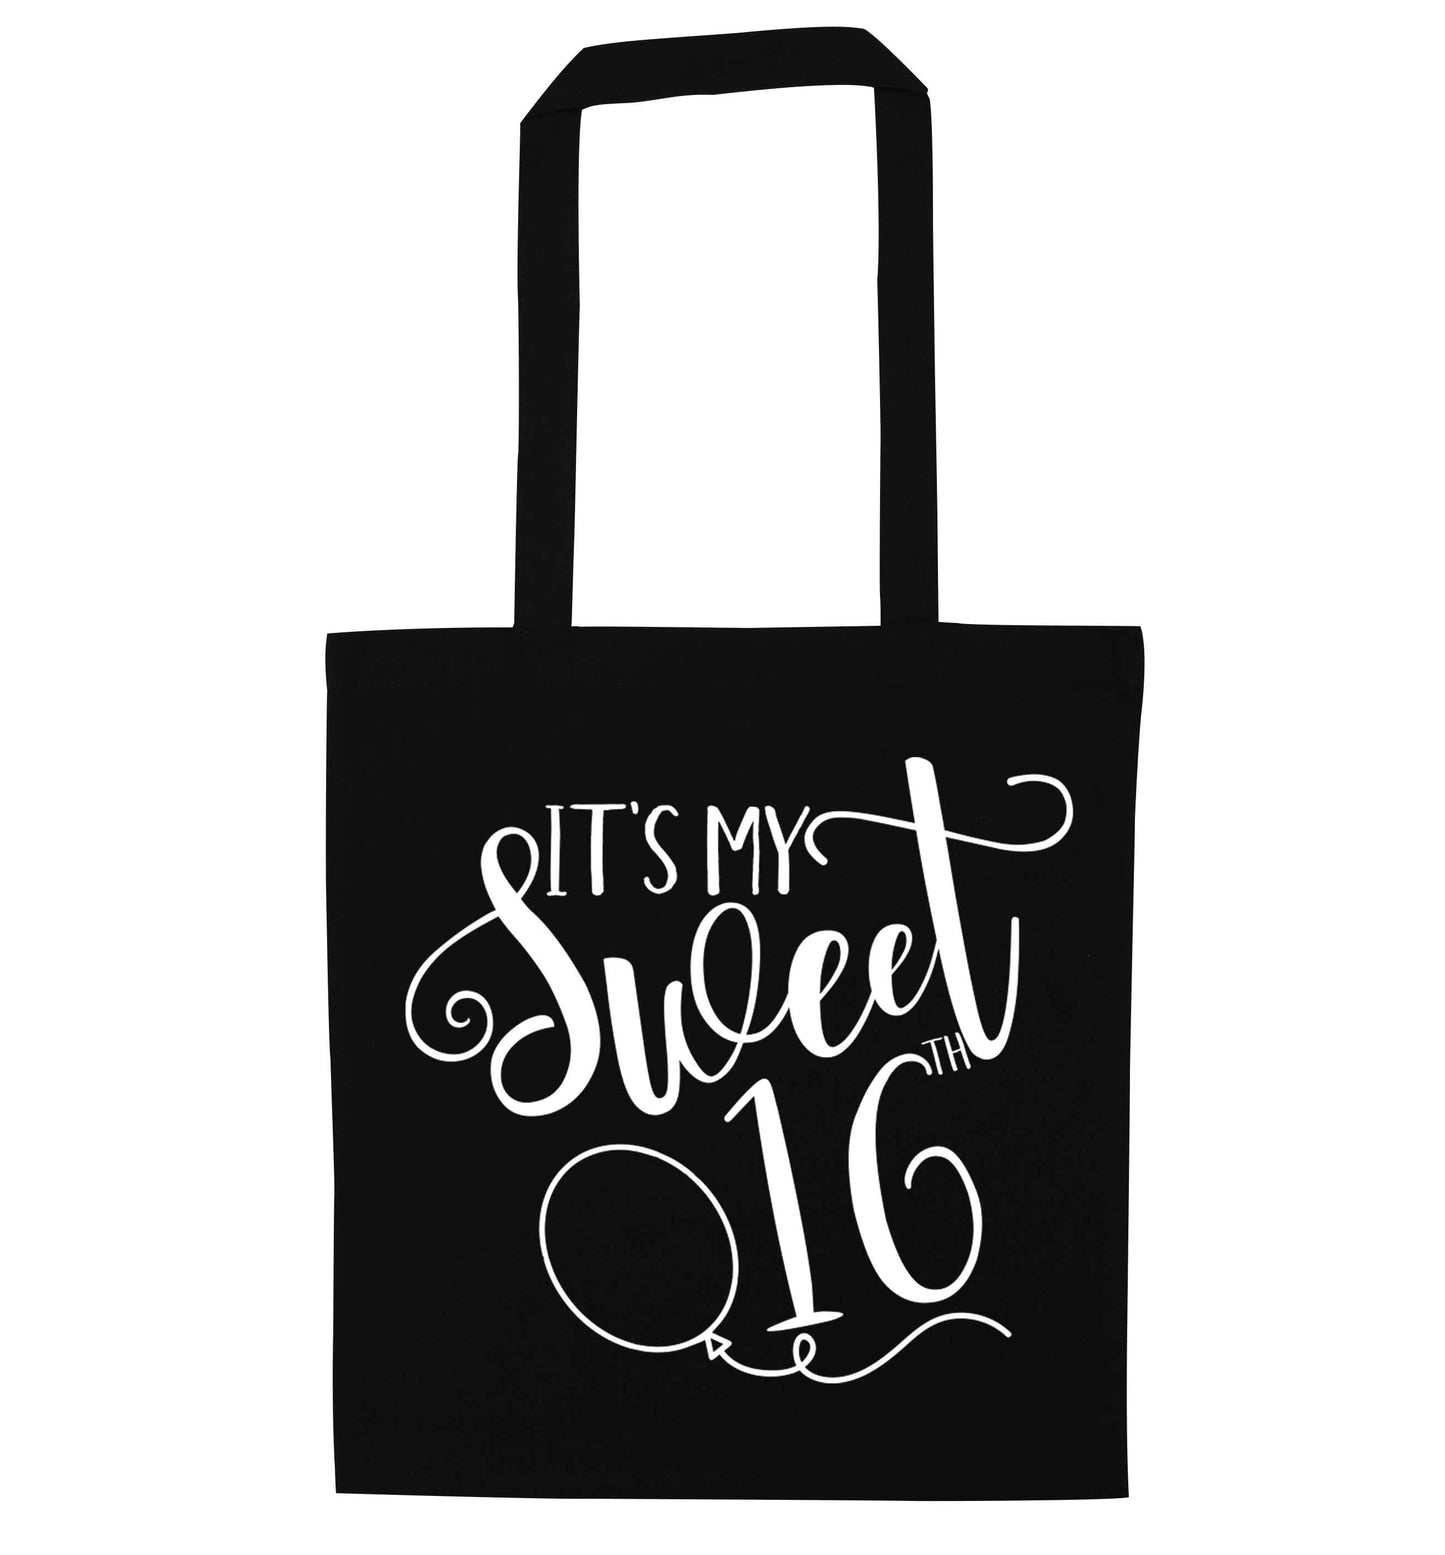 It's my sweet 16thblack tote bag